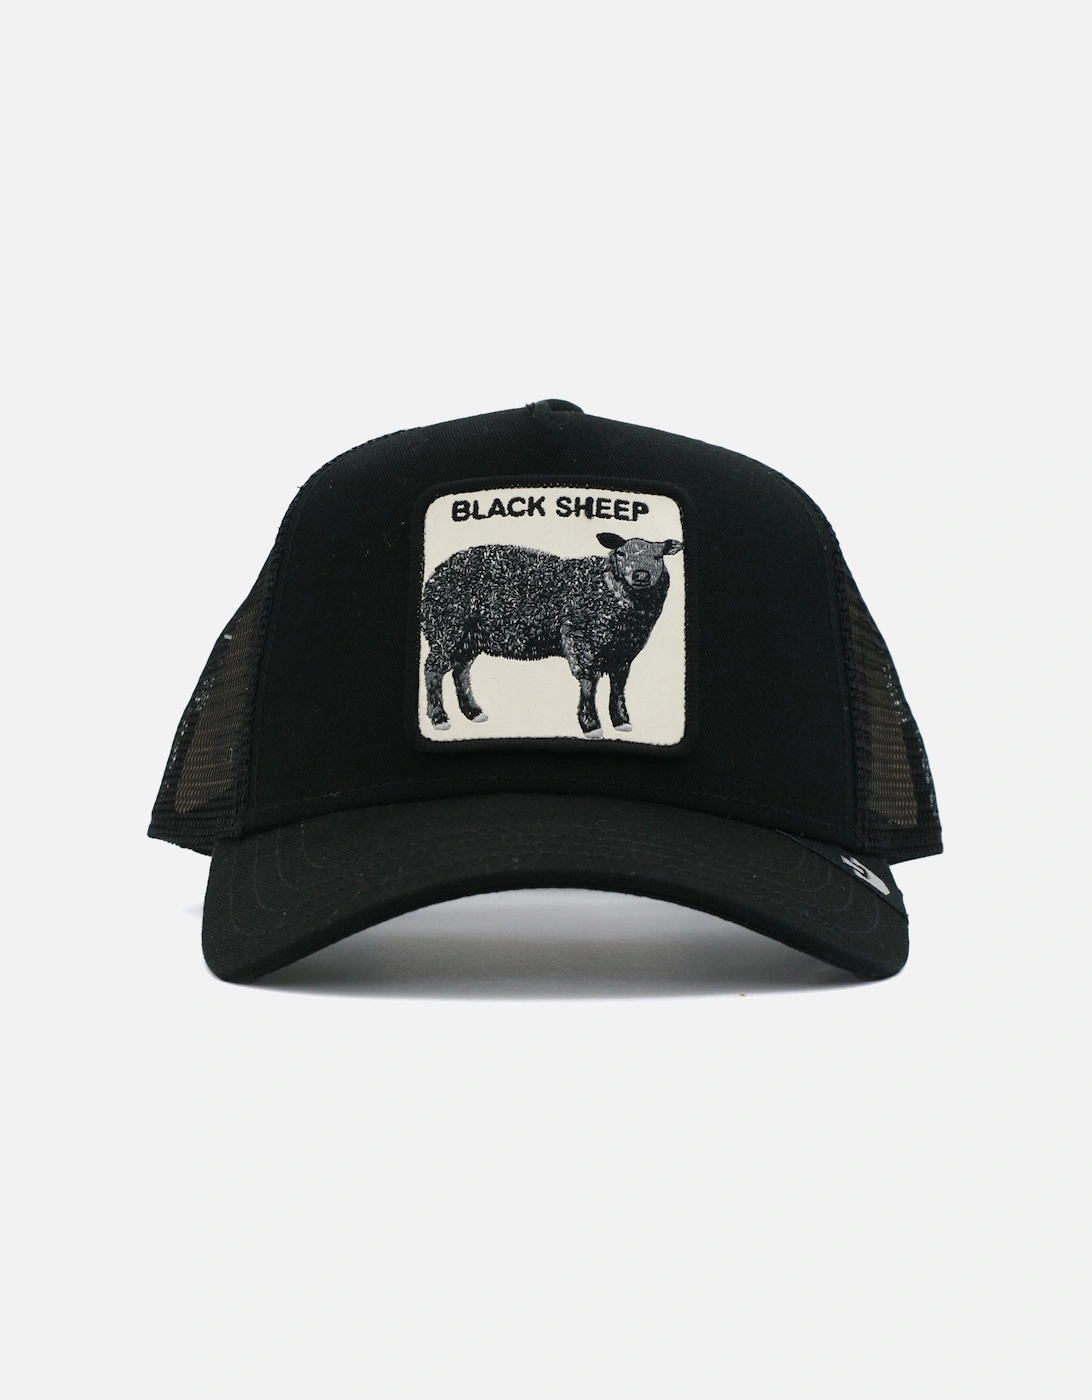 The Black Sheep Black Cap, 4 of 3